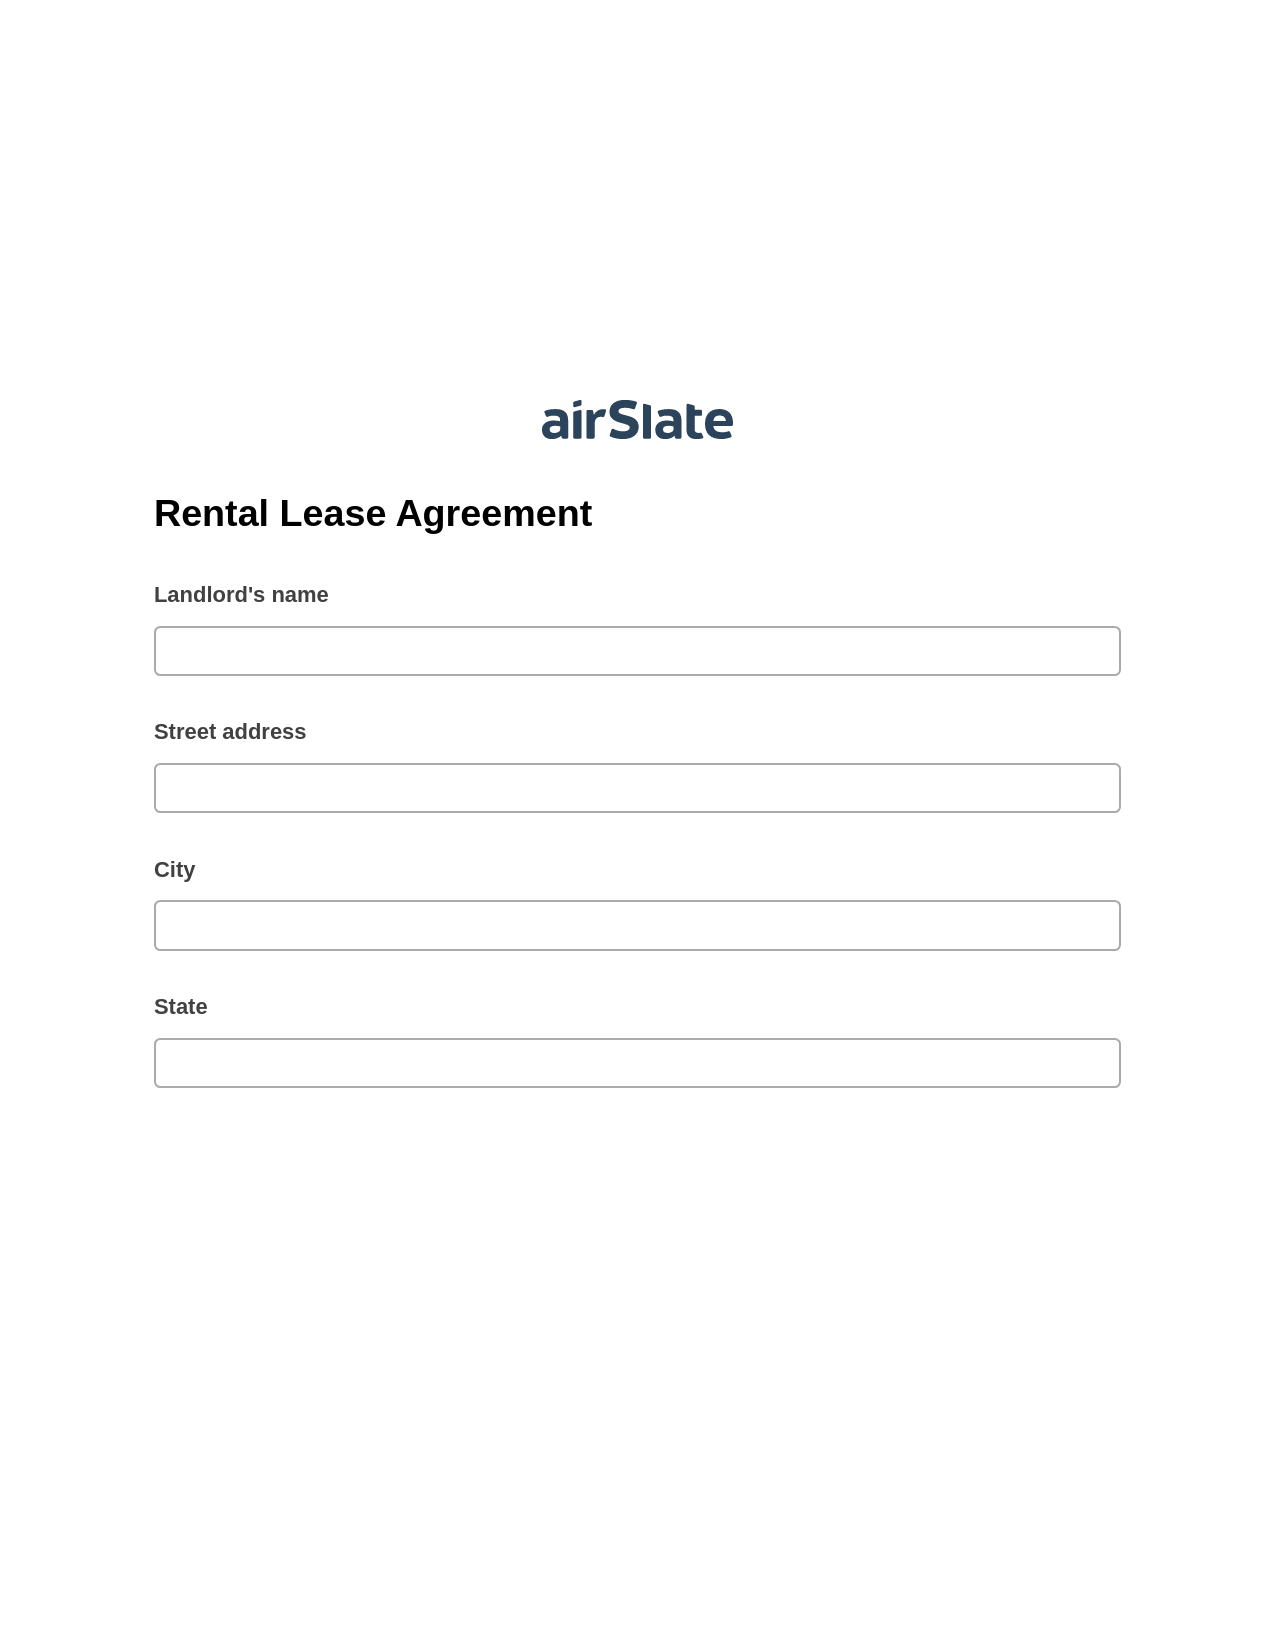 Rental Lease Agreement Pre-fill Slate from MS Dynamics 365 Records Bot, Invoke Salesforce Process Bot, Webhook Postfinish Bot